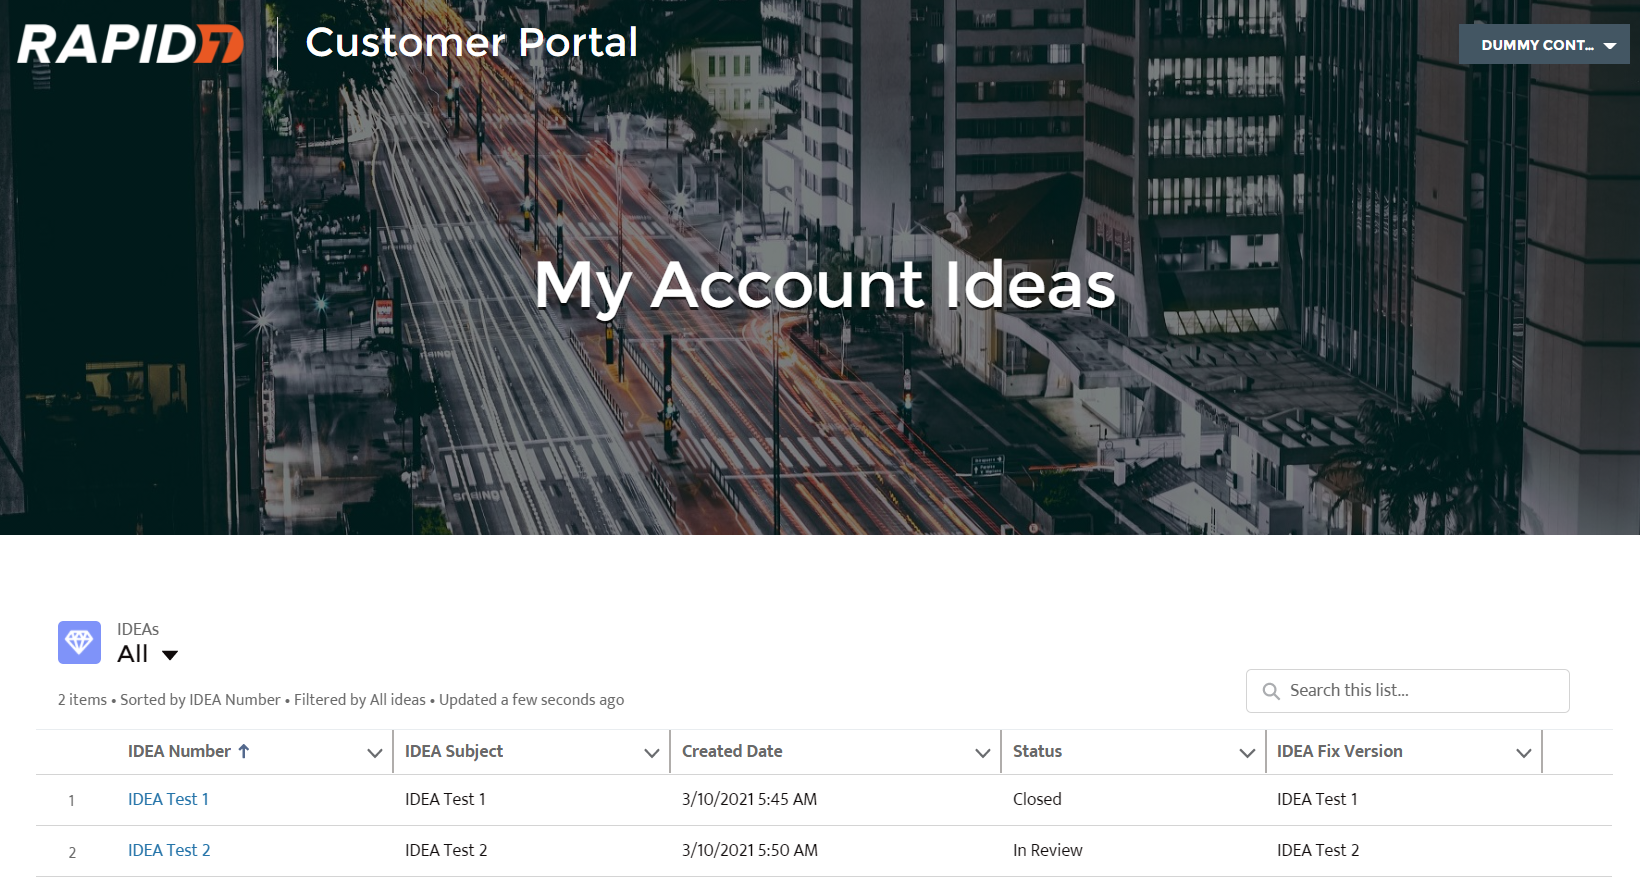 Customer Portal My Account Ideas Page